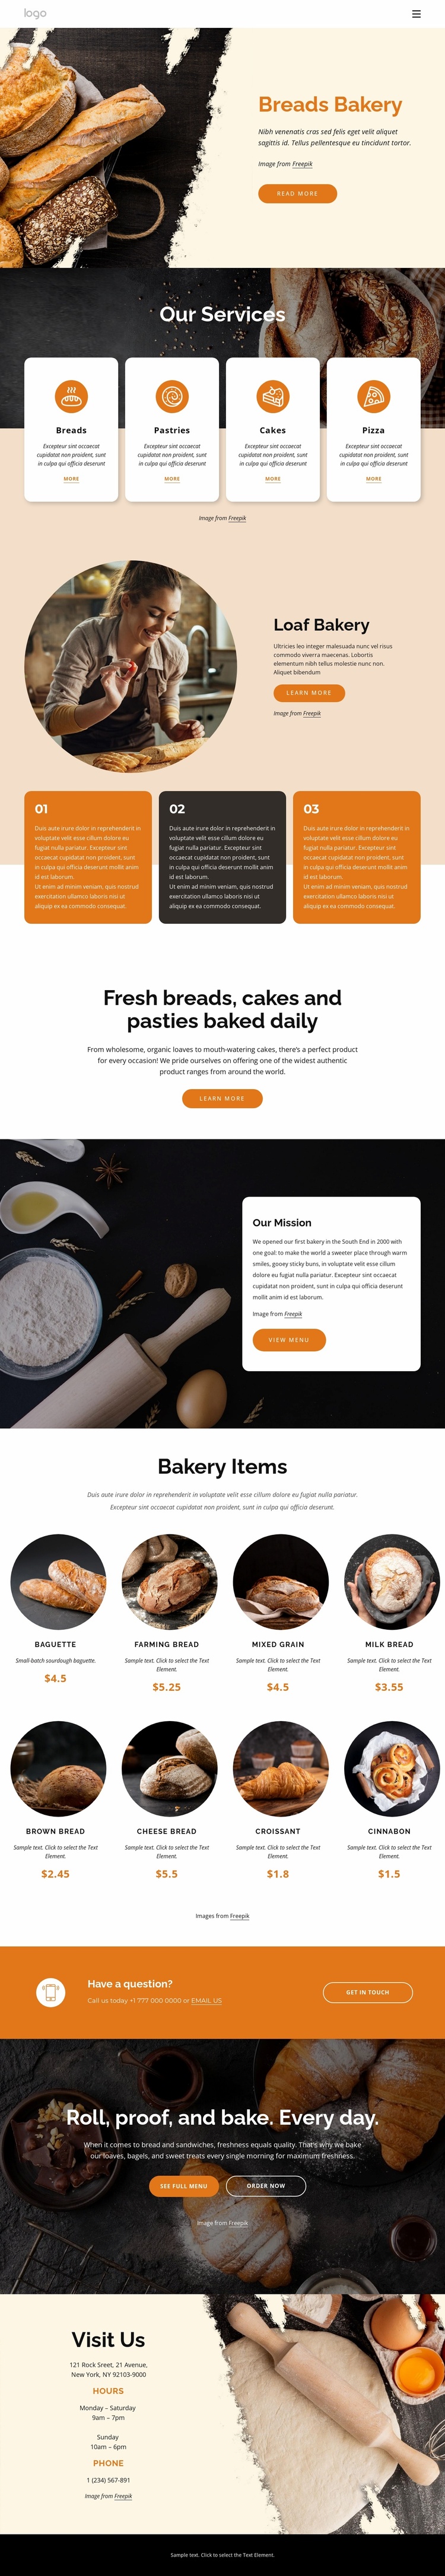 Breads bakery Website Template